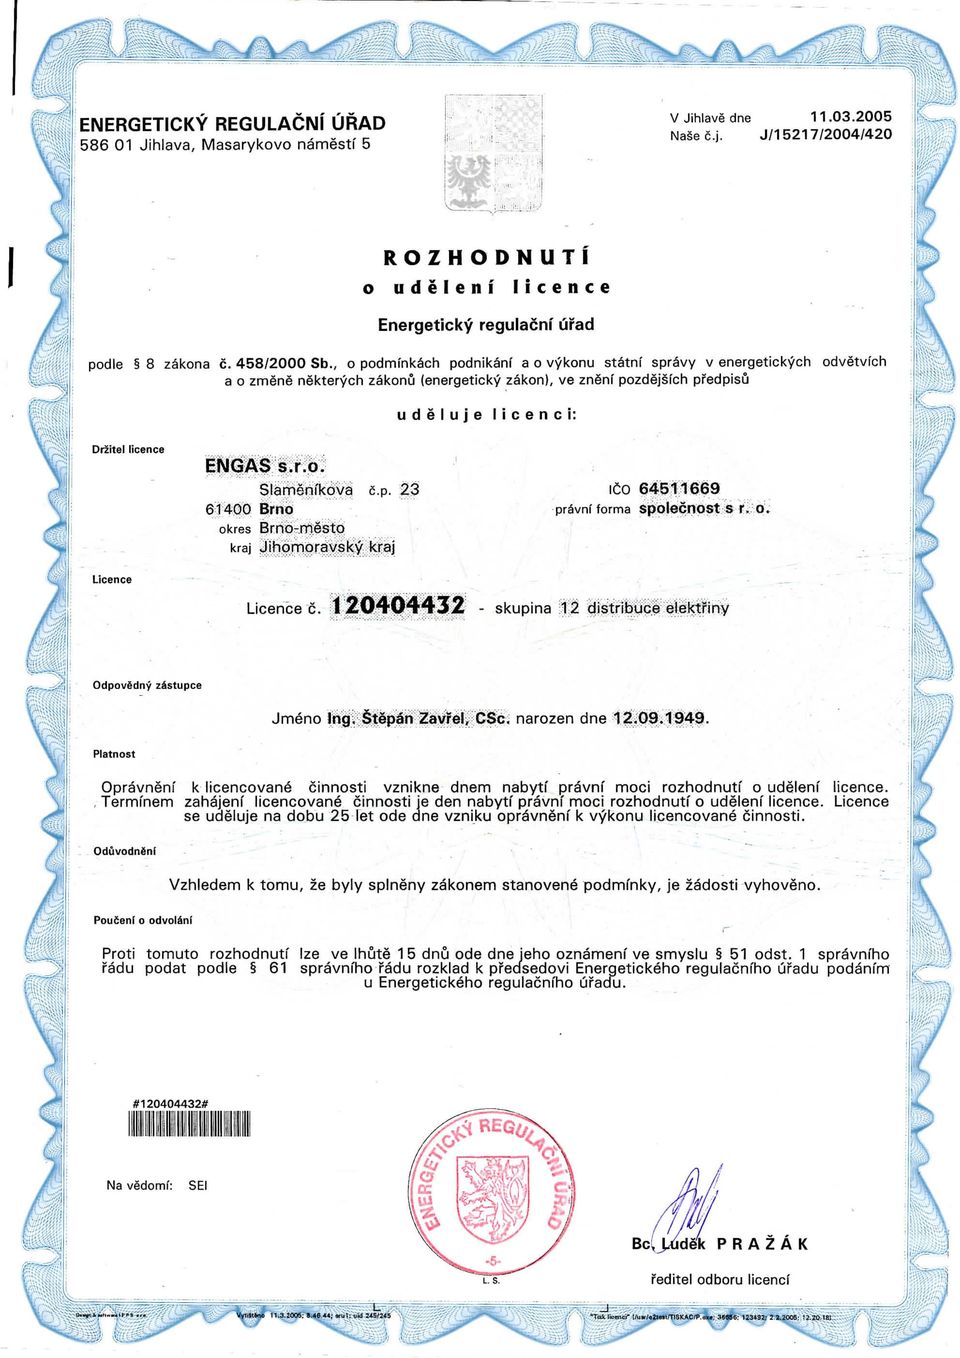 nfi;estp kraj sjihoitioraysky kraj ico 64511669 i forma S[)o ecnost S f. O. Licence Licence c.